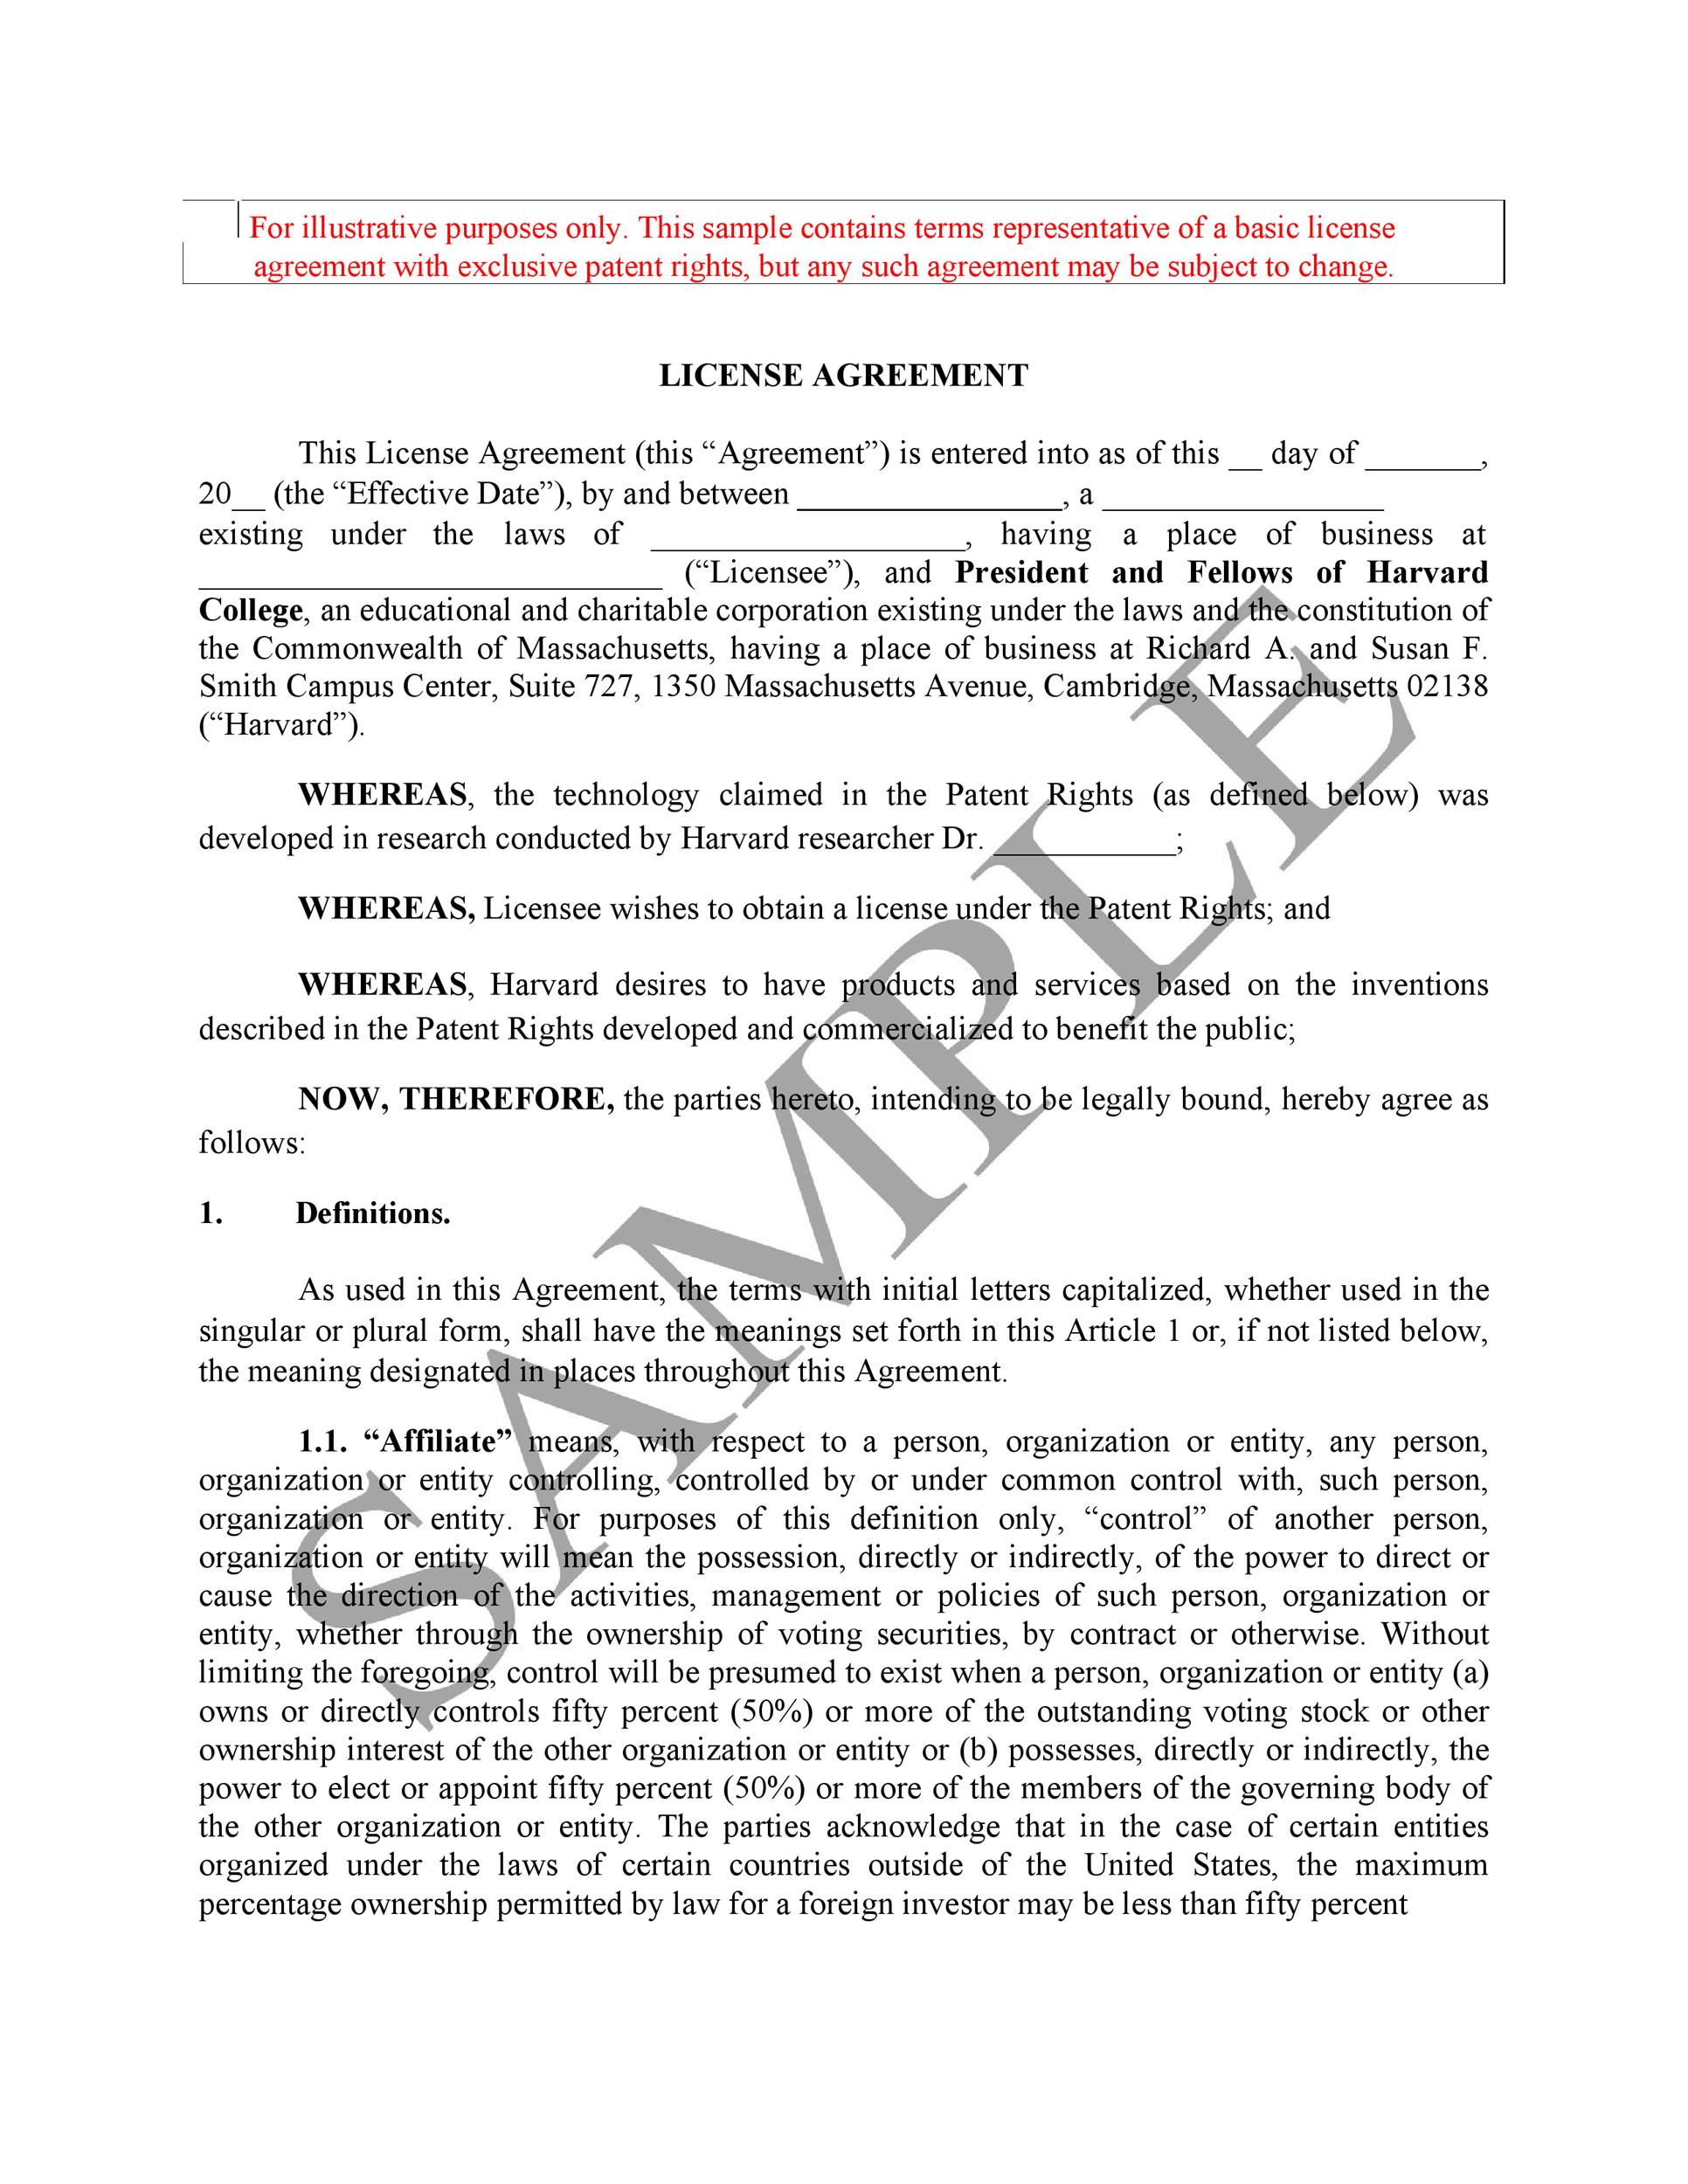 50 Professional License Agreement Templates ᐅ Templatelab